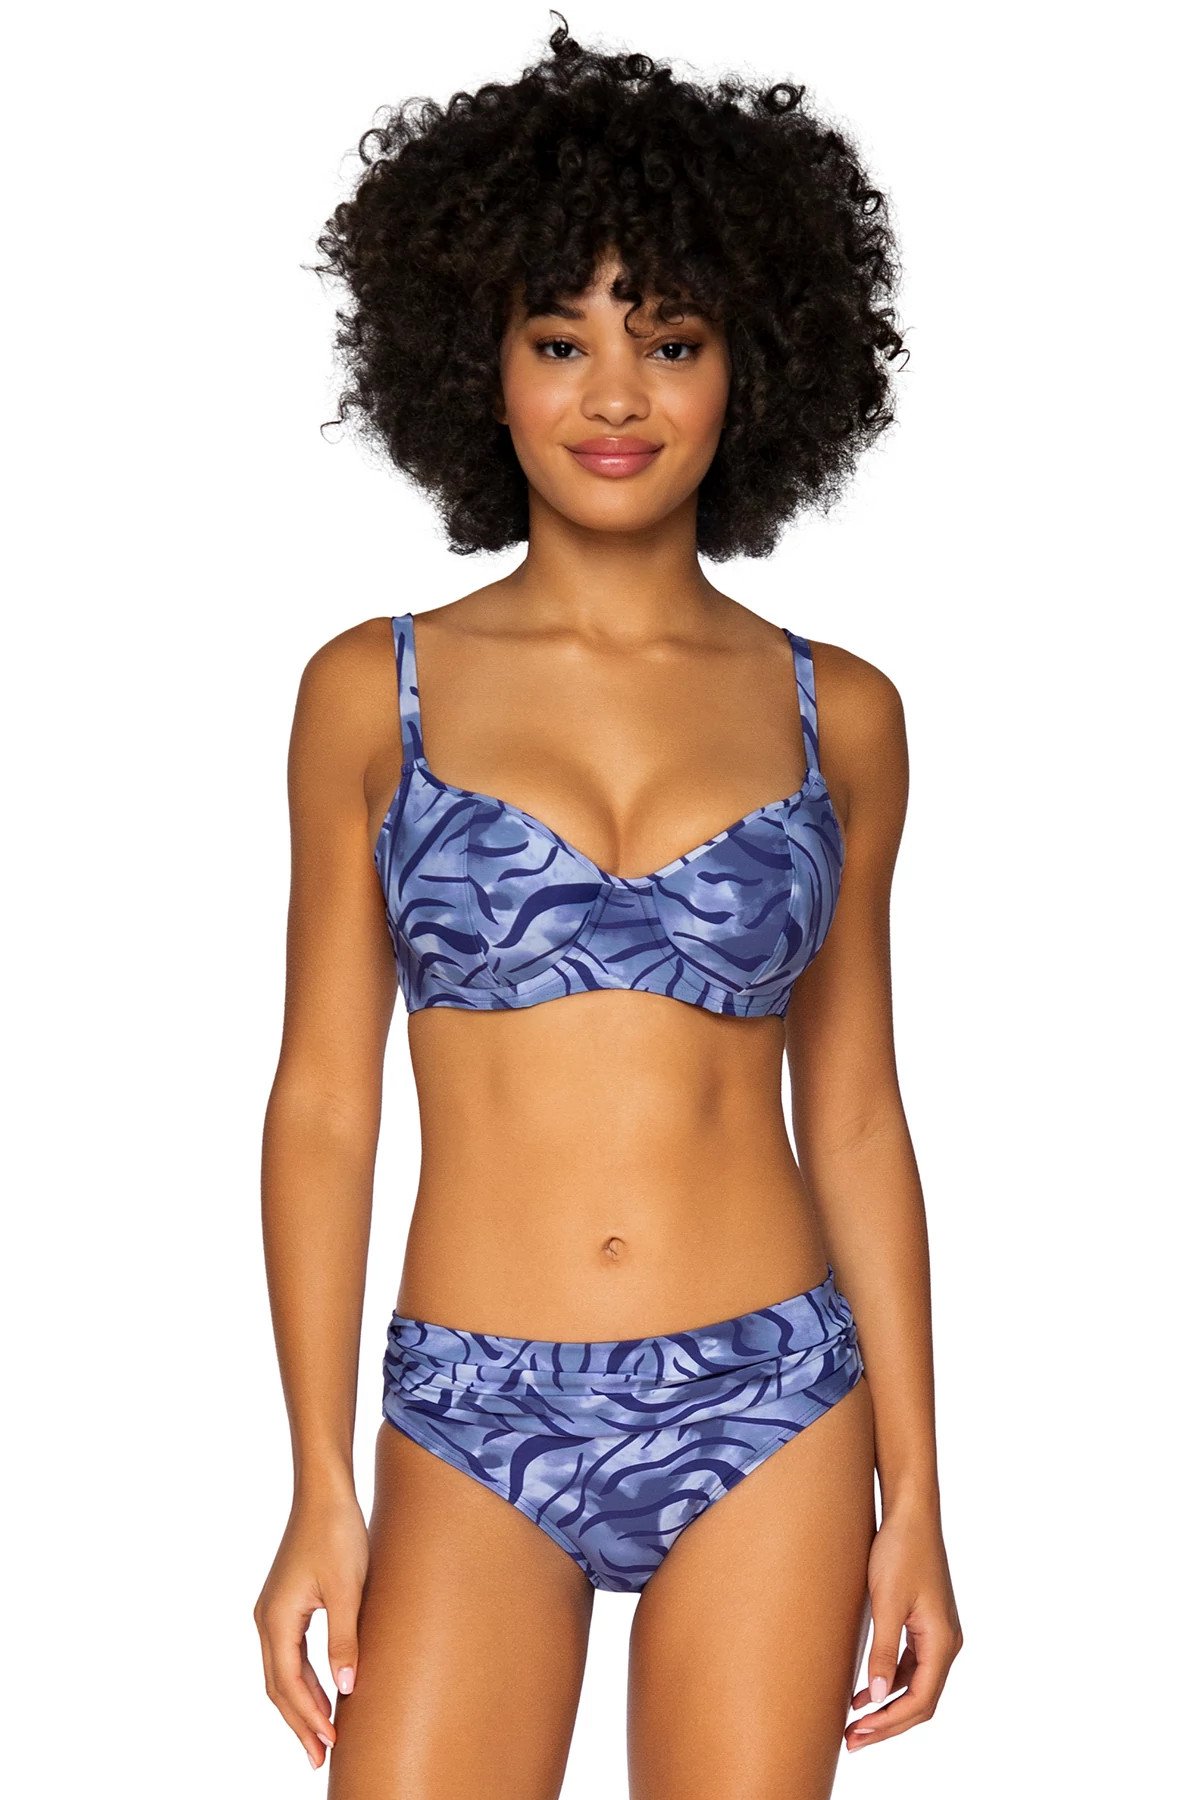 SUMATRA Carmen Underwire Bikini Top (E-H Cup) image number 1